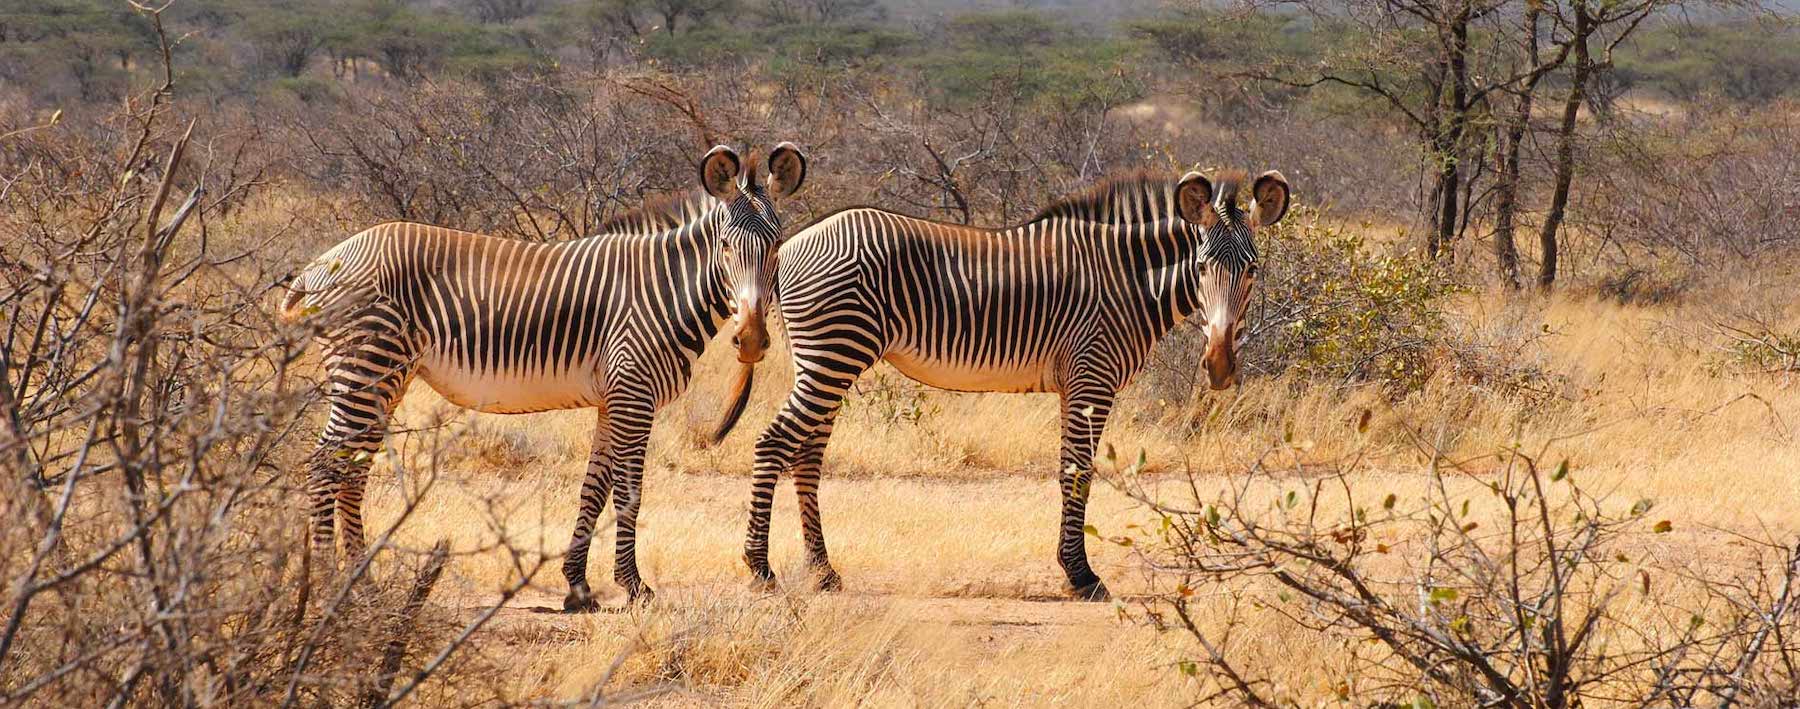 tanzania vs kenya for safari